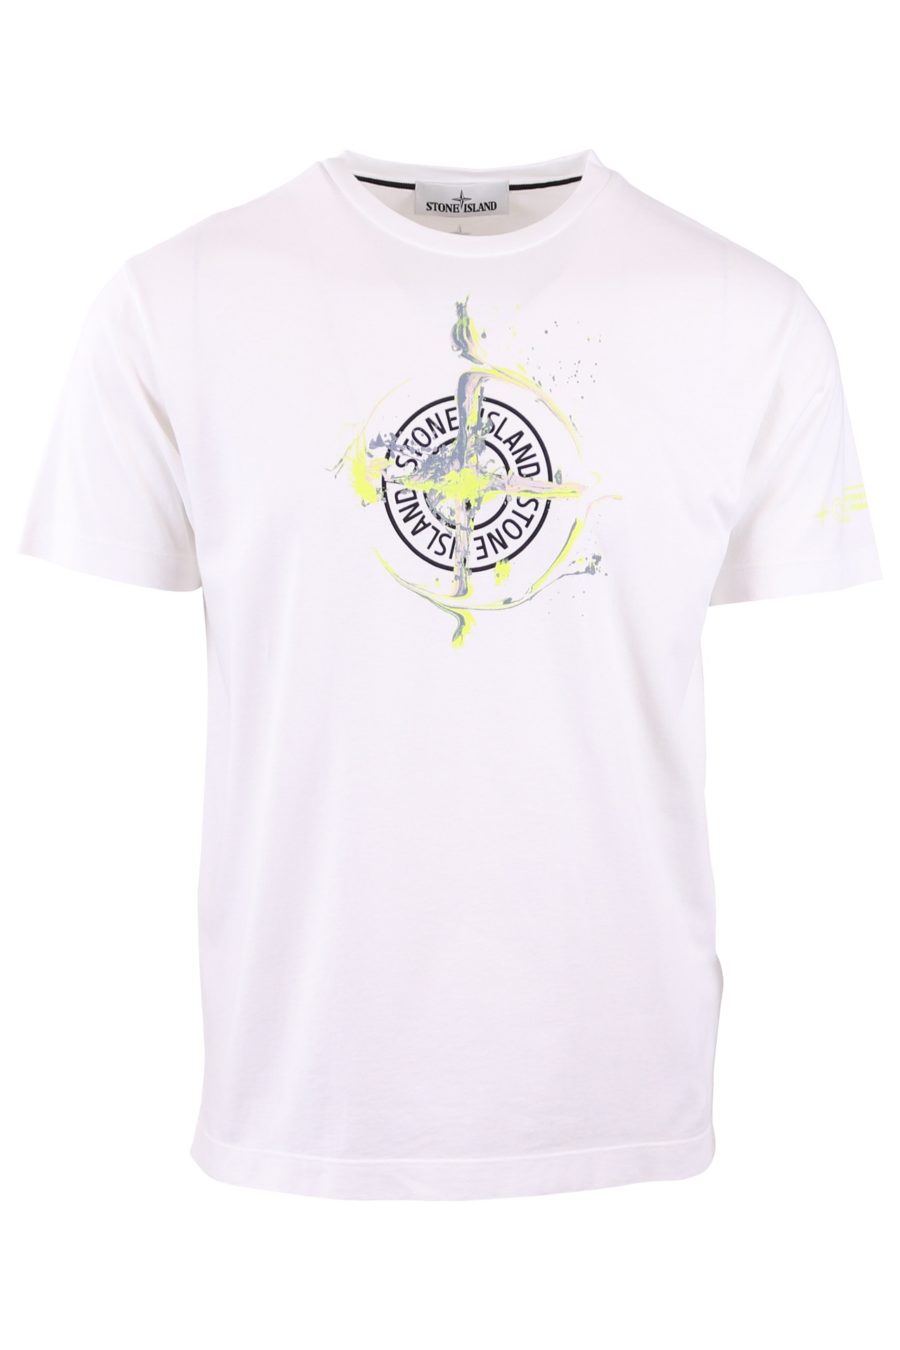 Camiseta Stone Island blanca con logo estampado - be58942e6639f0f78729d836f033735e7b49b97d